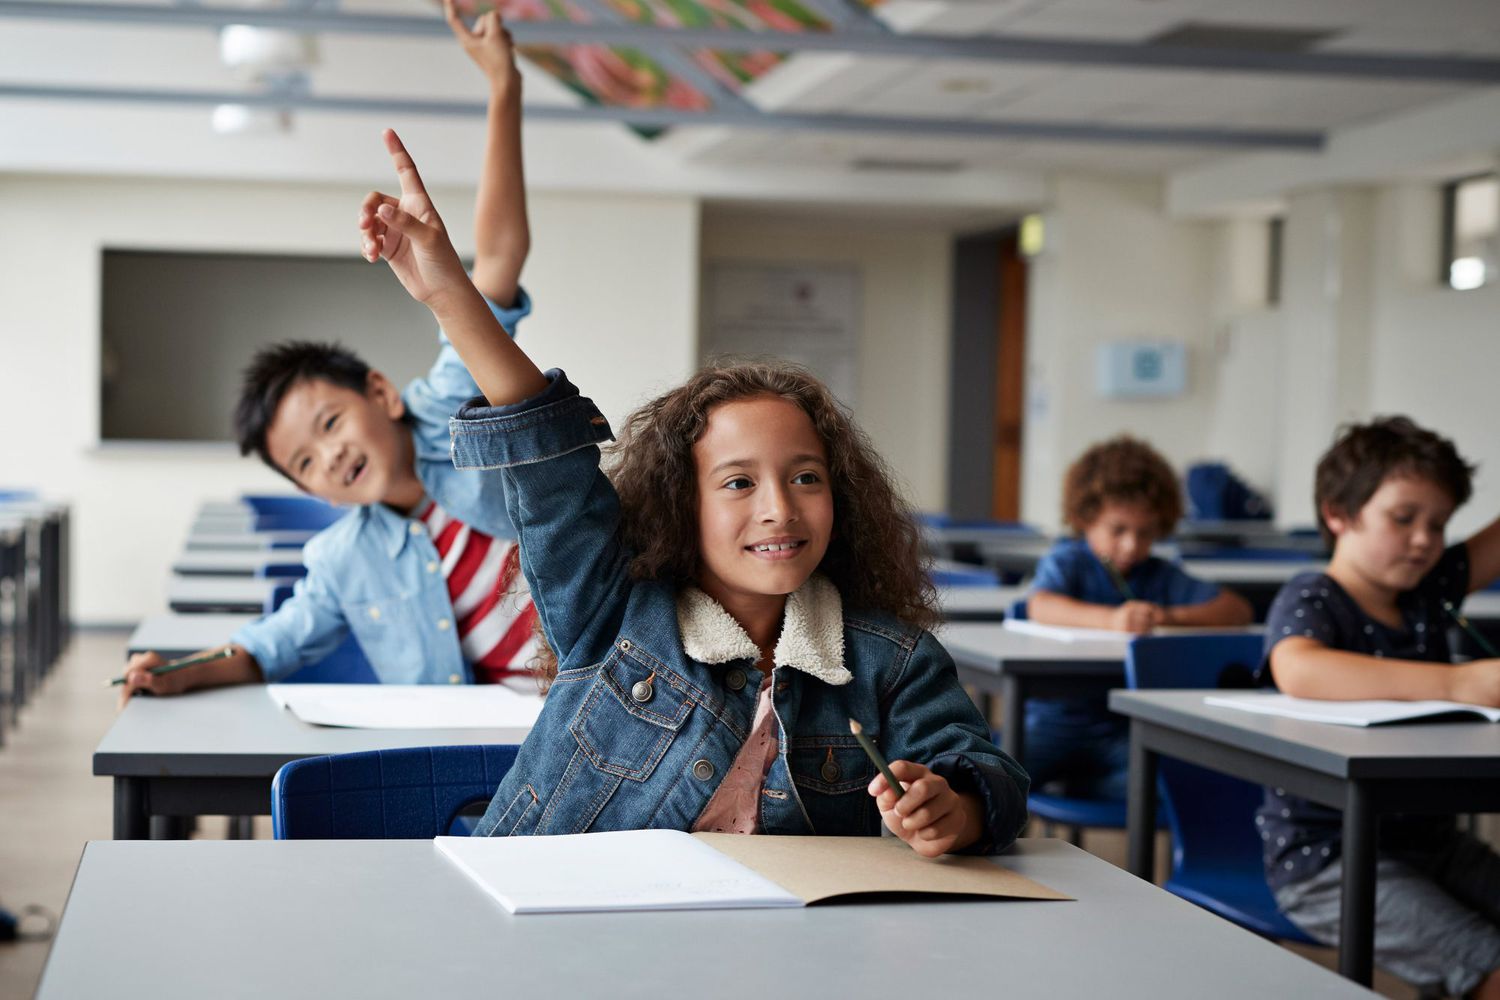 An image of children raising their hands in class.